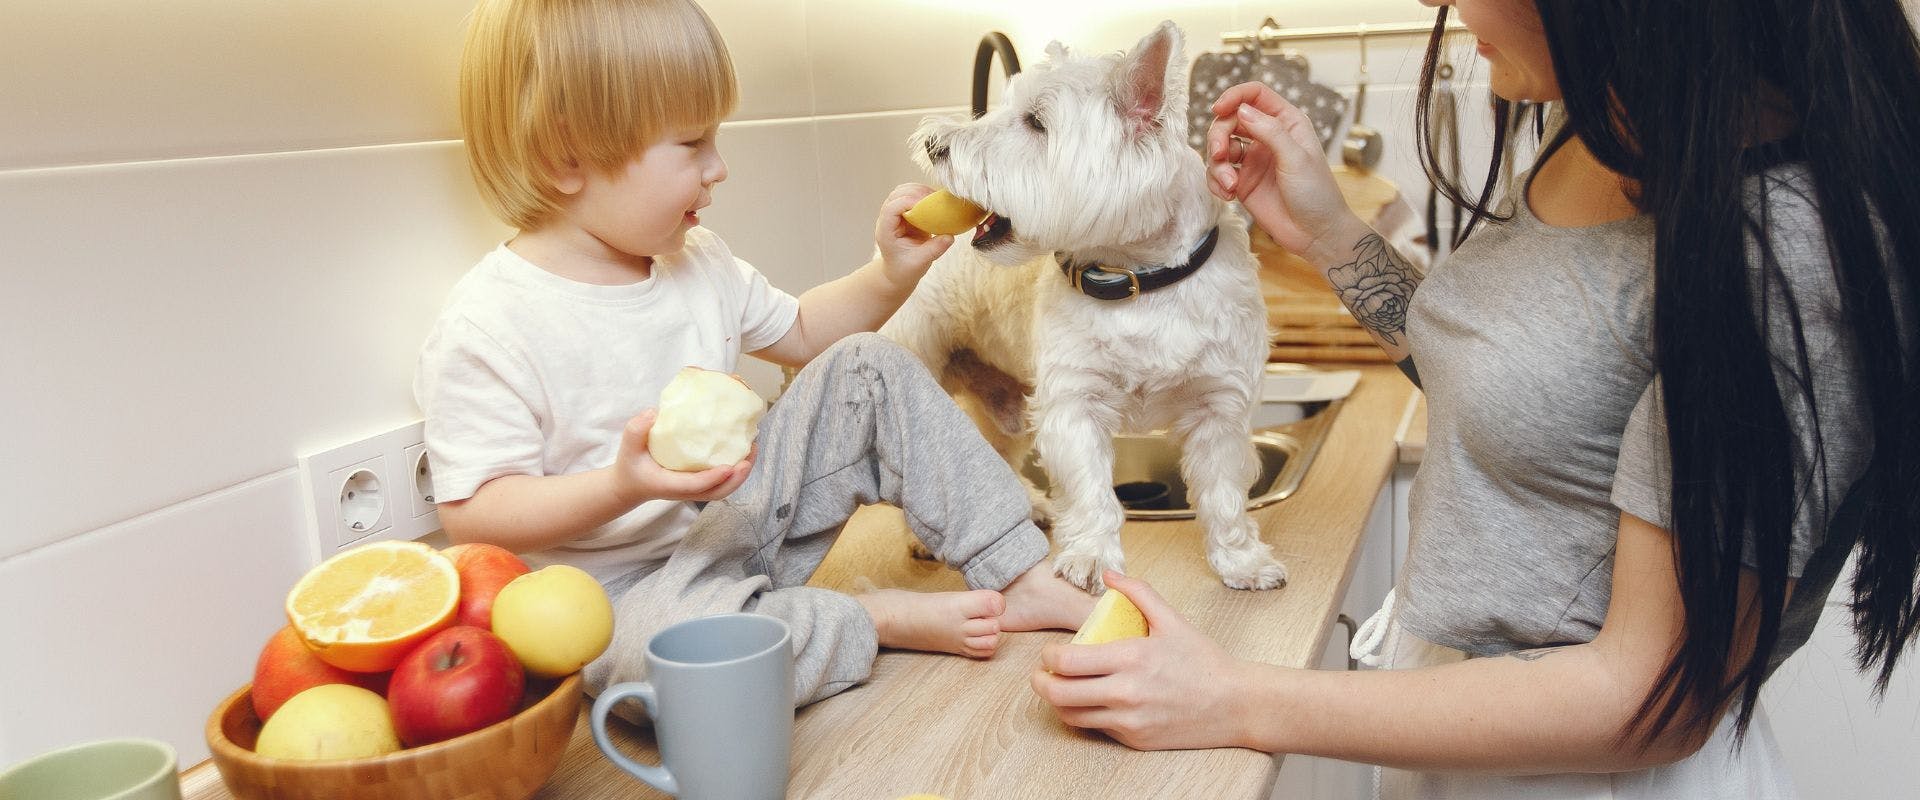 West Highland Terrier dog eating lemon